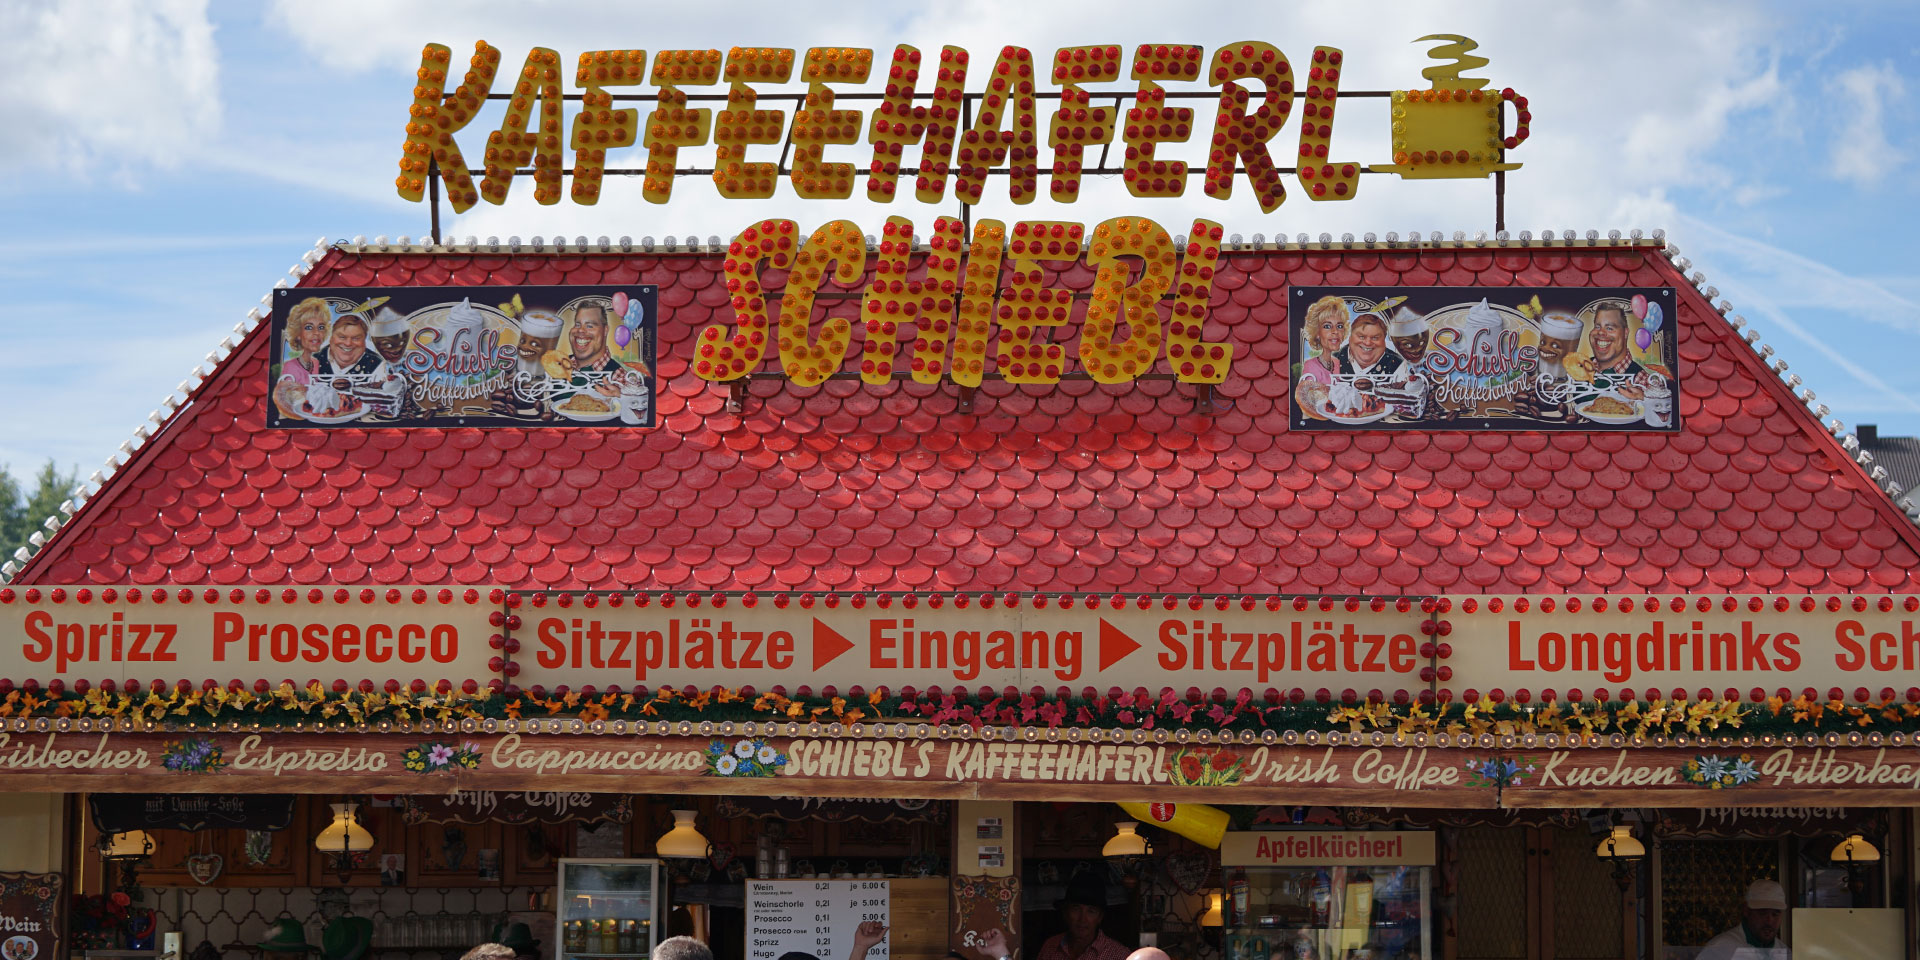 Kaffeehaferl Schiebl – Oktoberfest